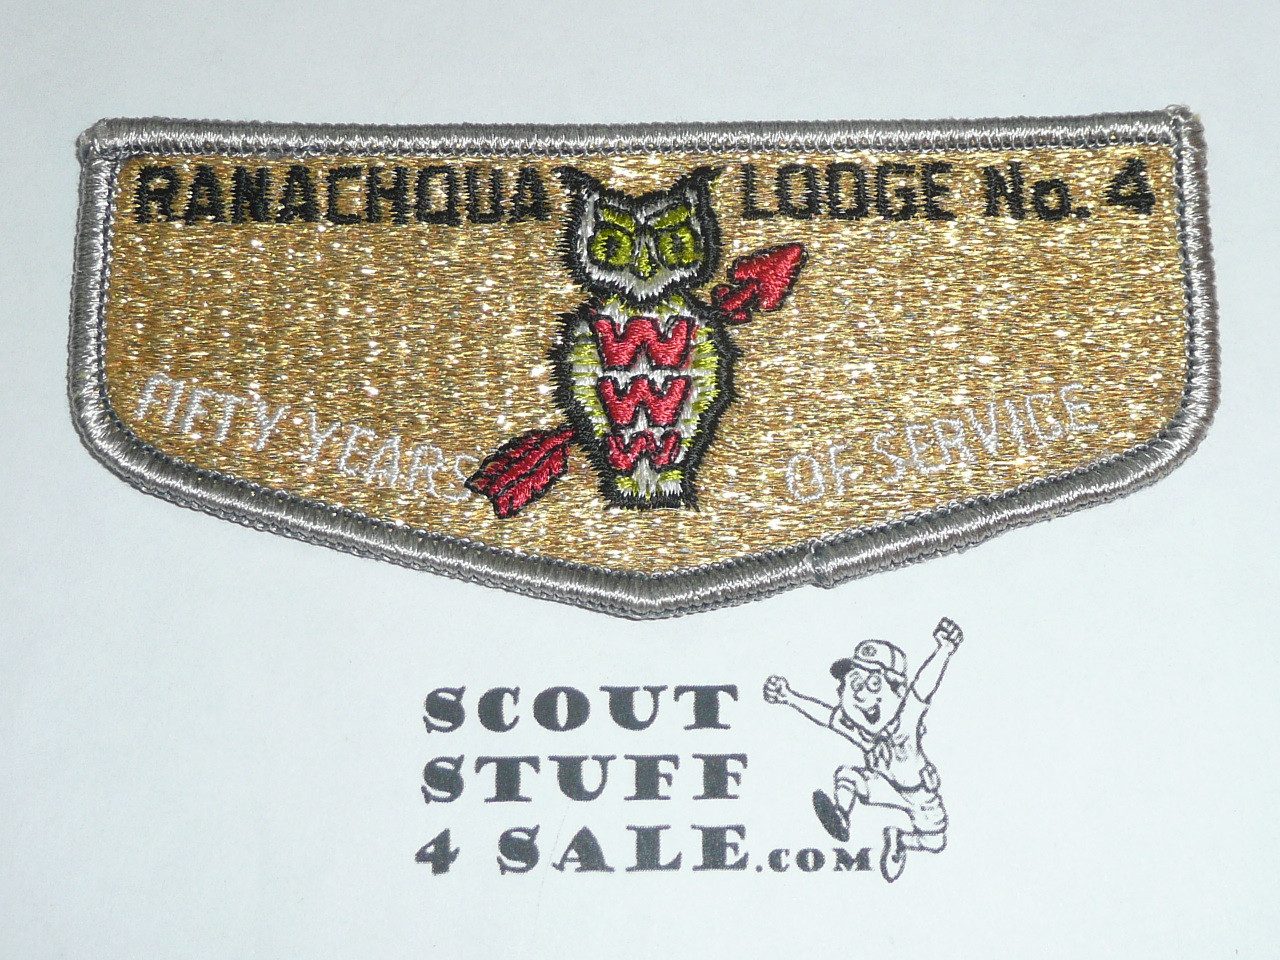 Order of the Arrow Lodge #4 Ranachqua s4 60th Anniversary Flap Patch